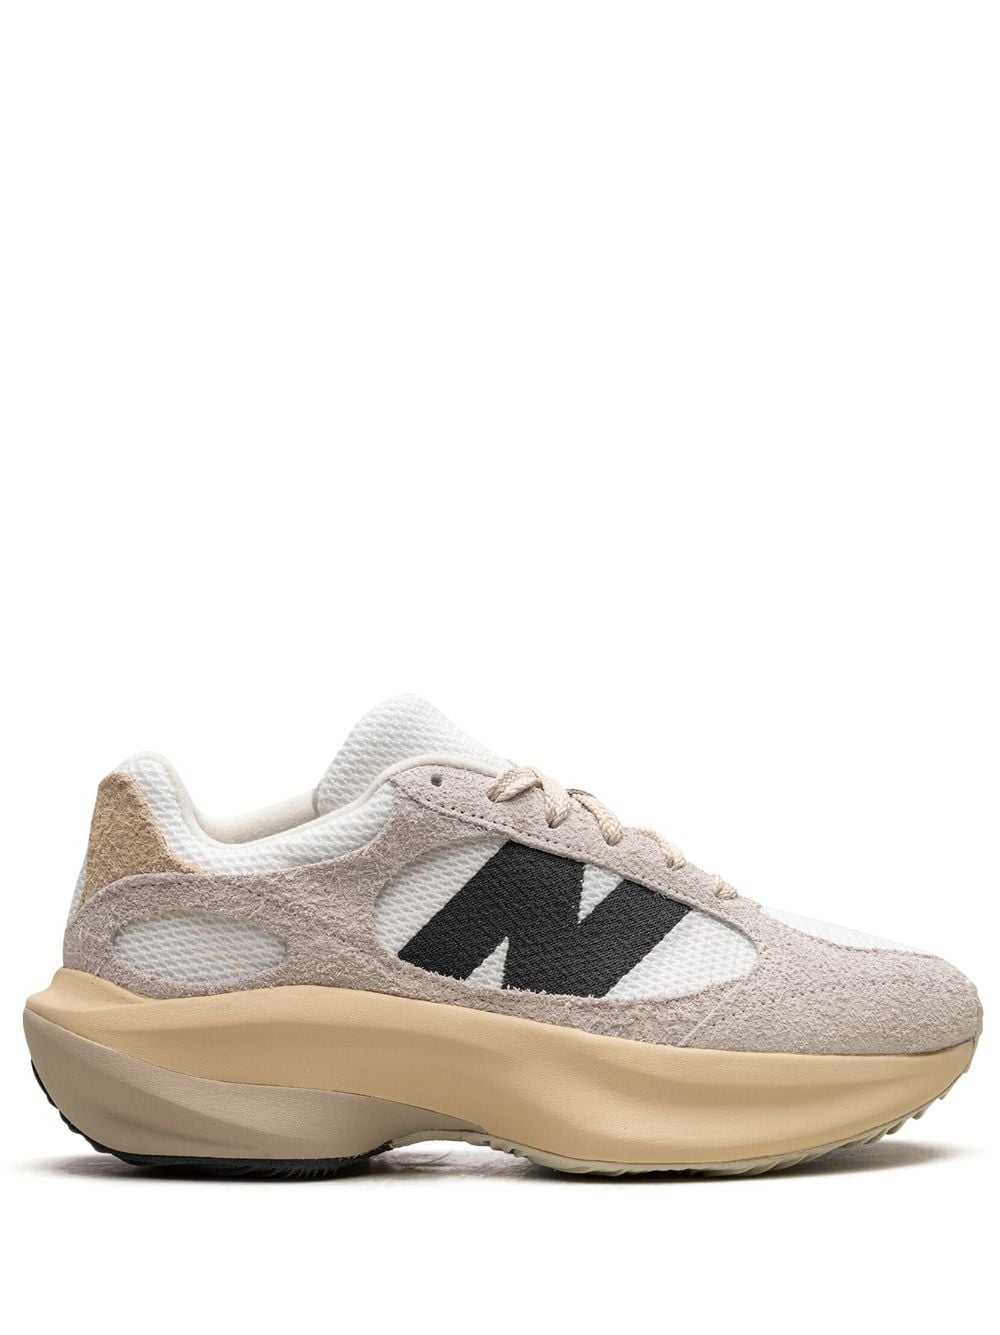 New Balance Warped Runner "Beige" sneakers - White